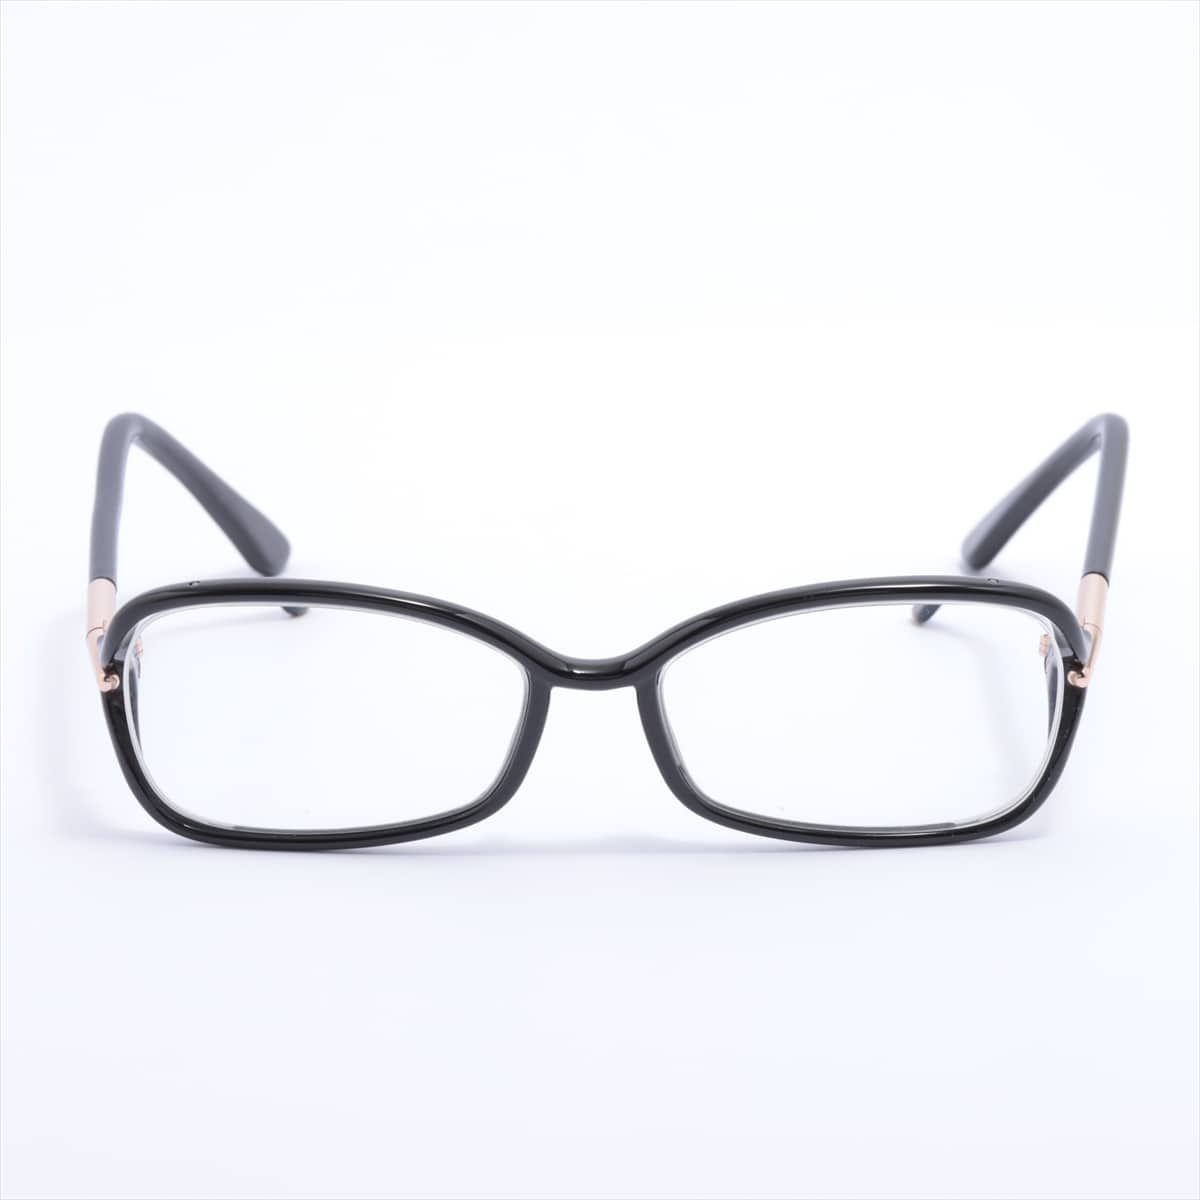 Tom Ford Glasses Plastic Black Use a prescription lens